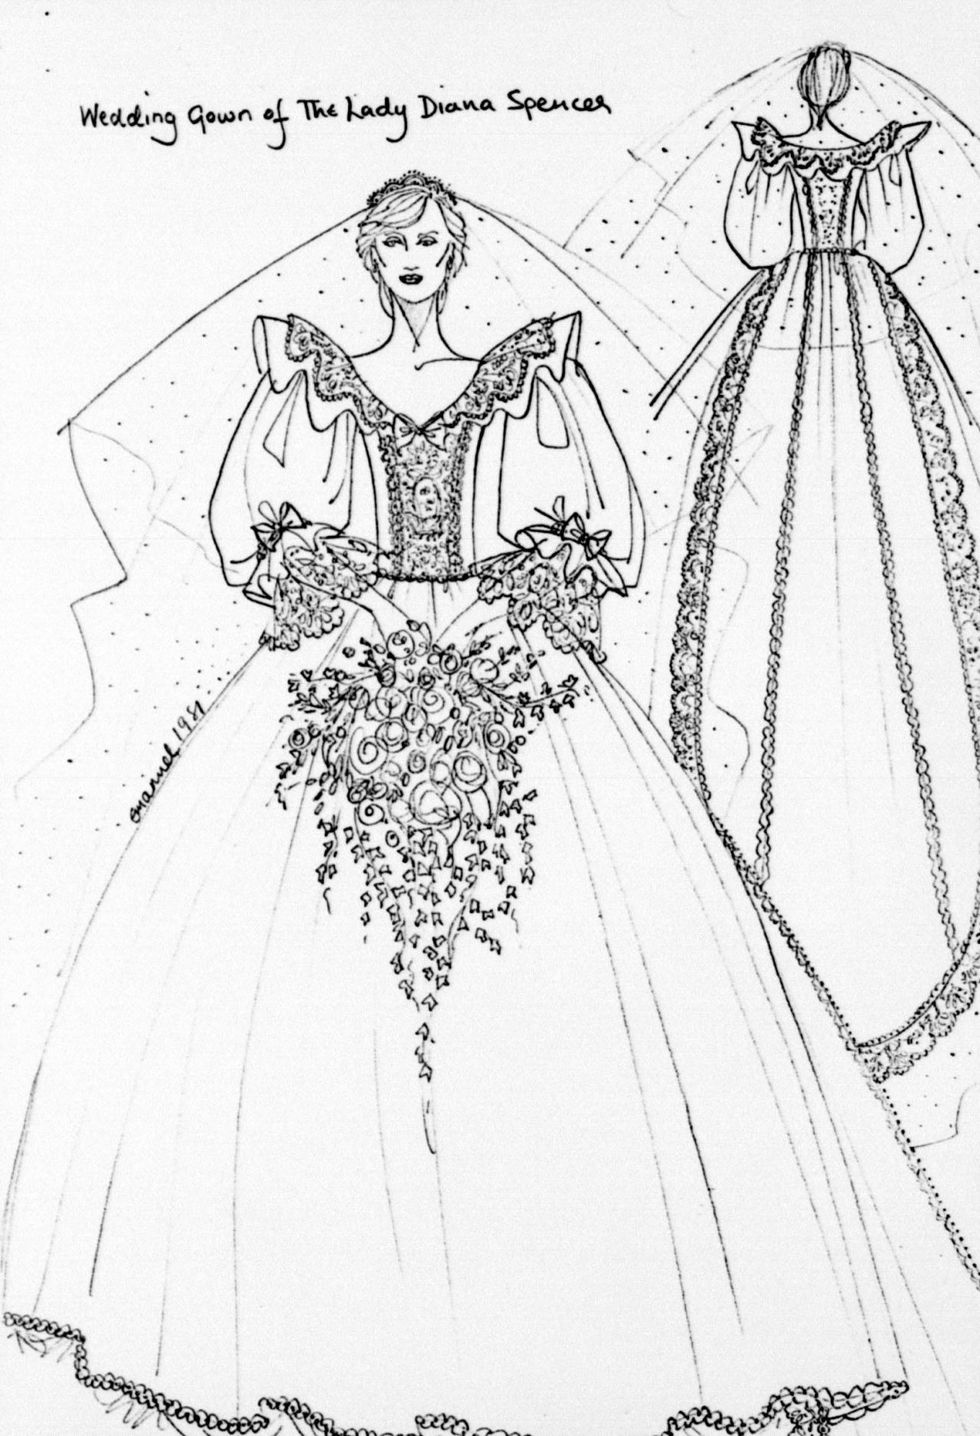 <p>凱特王妃的婚紗是由Alexander McQueen的設計師Sarah Burton所設計，而黛安娜王妃則是由Elizabeth Emanuel所設計，兩人的白紗都是以蕾絲為主所打造。</p>